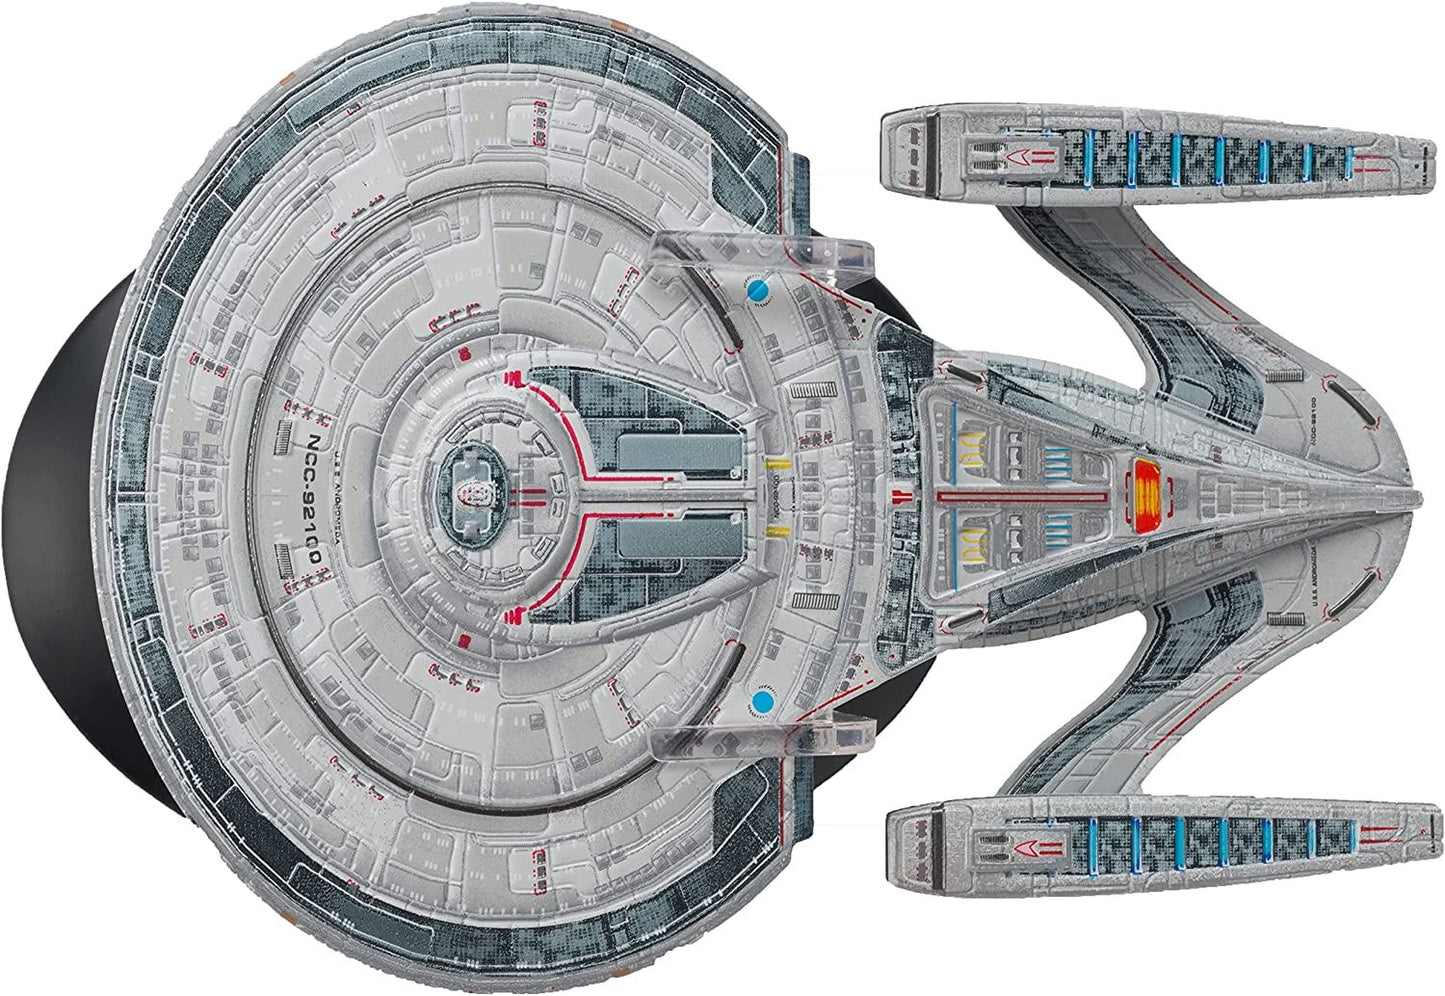 #03 U.S.S Andromeda-Class Federation Exploration Cruiser NCC-92100 Starship Model Diecast Ship STO (Eaglemoss / Star Trek)